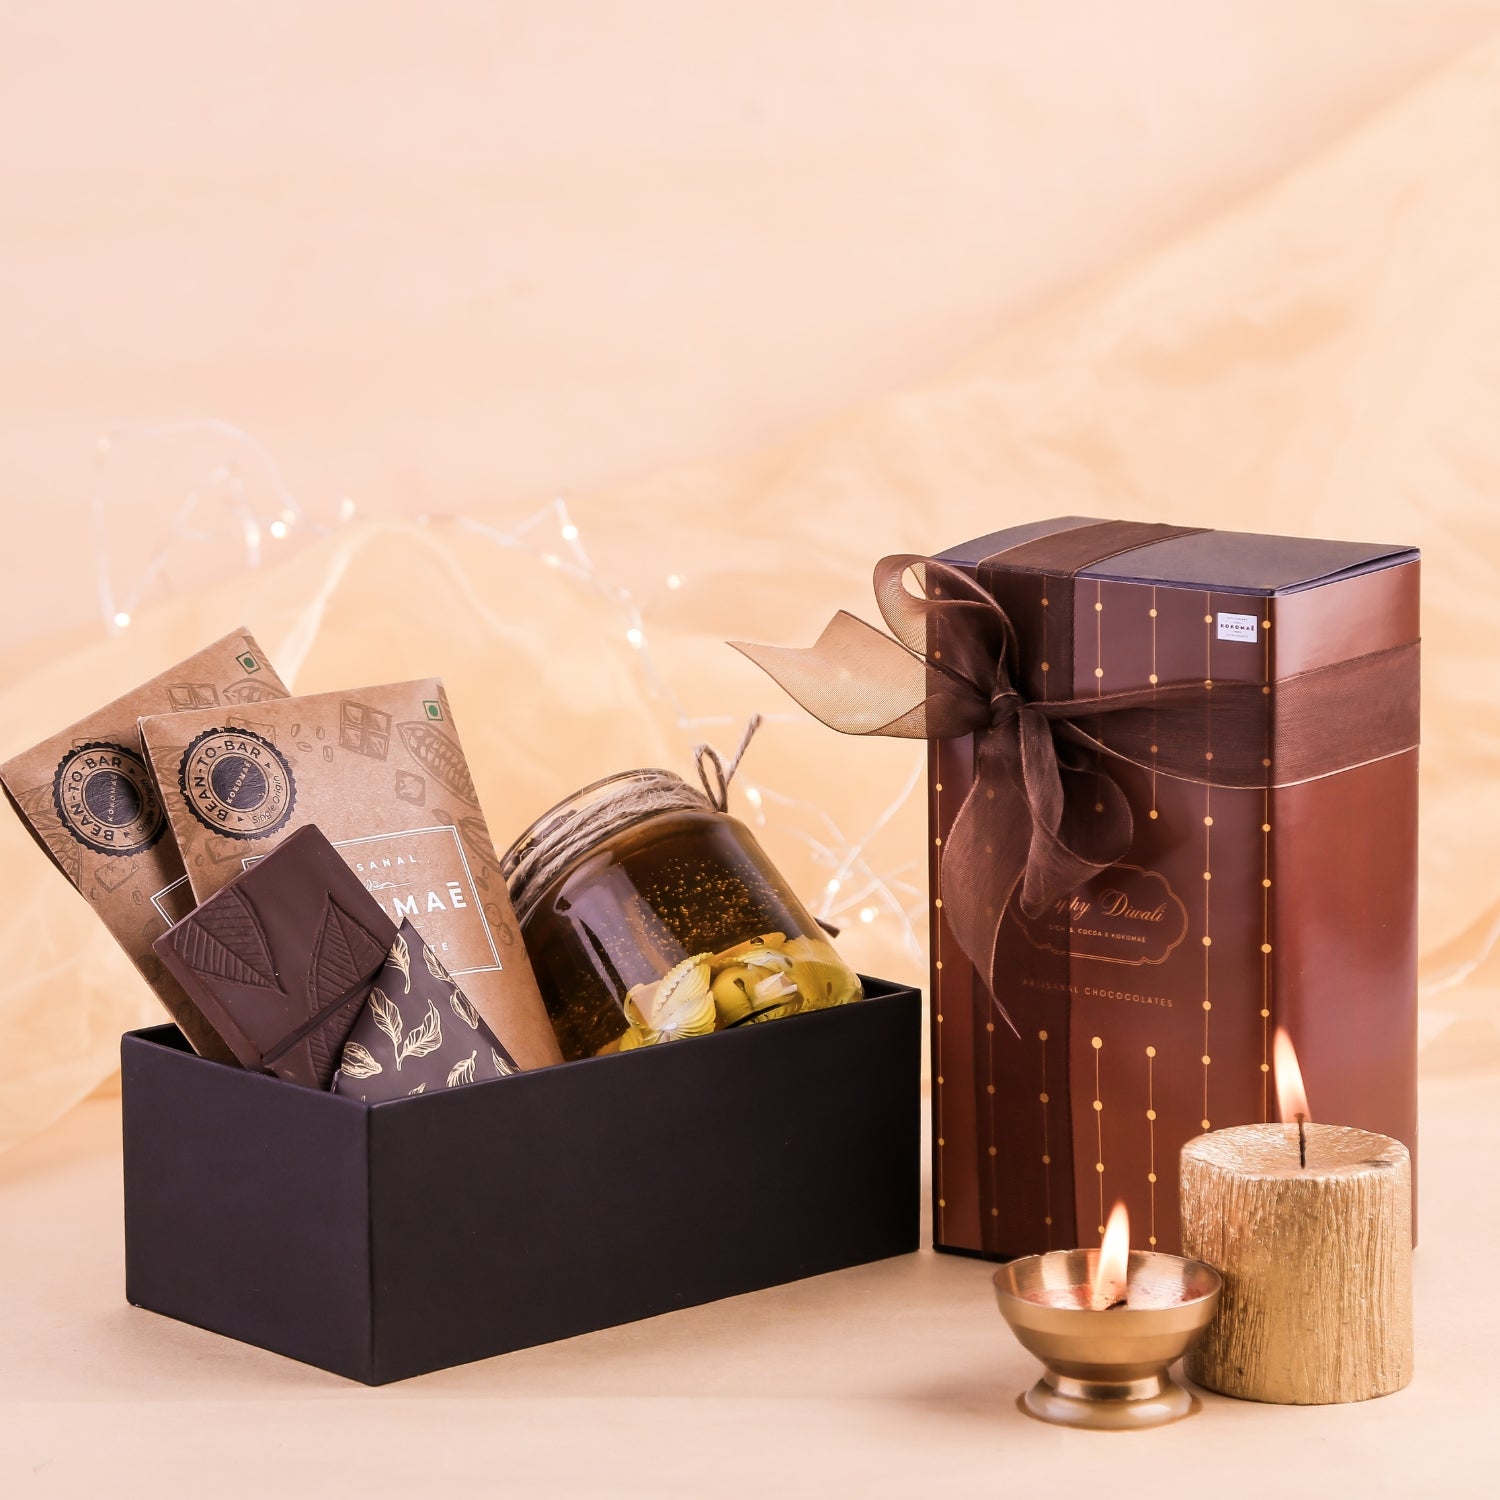 Kokomaē Premium Diwali Chocolate Offering : 72% Dark with Coffee & 75% Dark with Sea Salt & a Candle